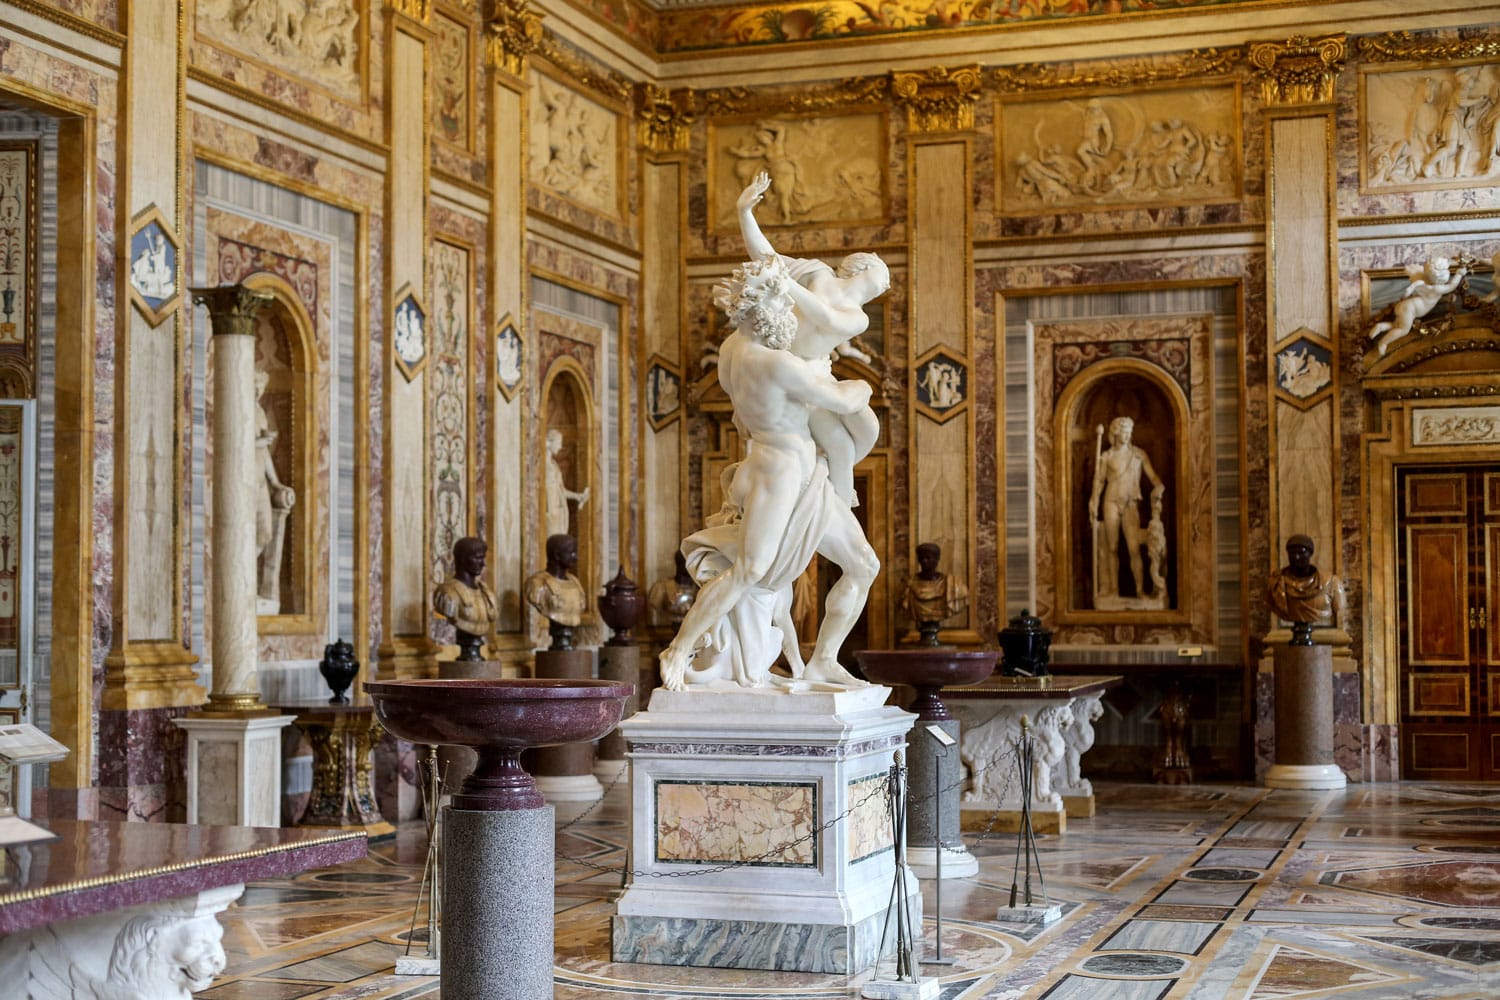 Baroque marble sculptural group by Italian artist Gian Lorenzo Bernini, Rape of Proserpine in Galleria Borghese, Rome, Italy